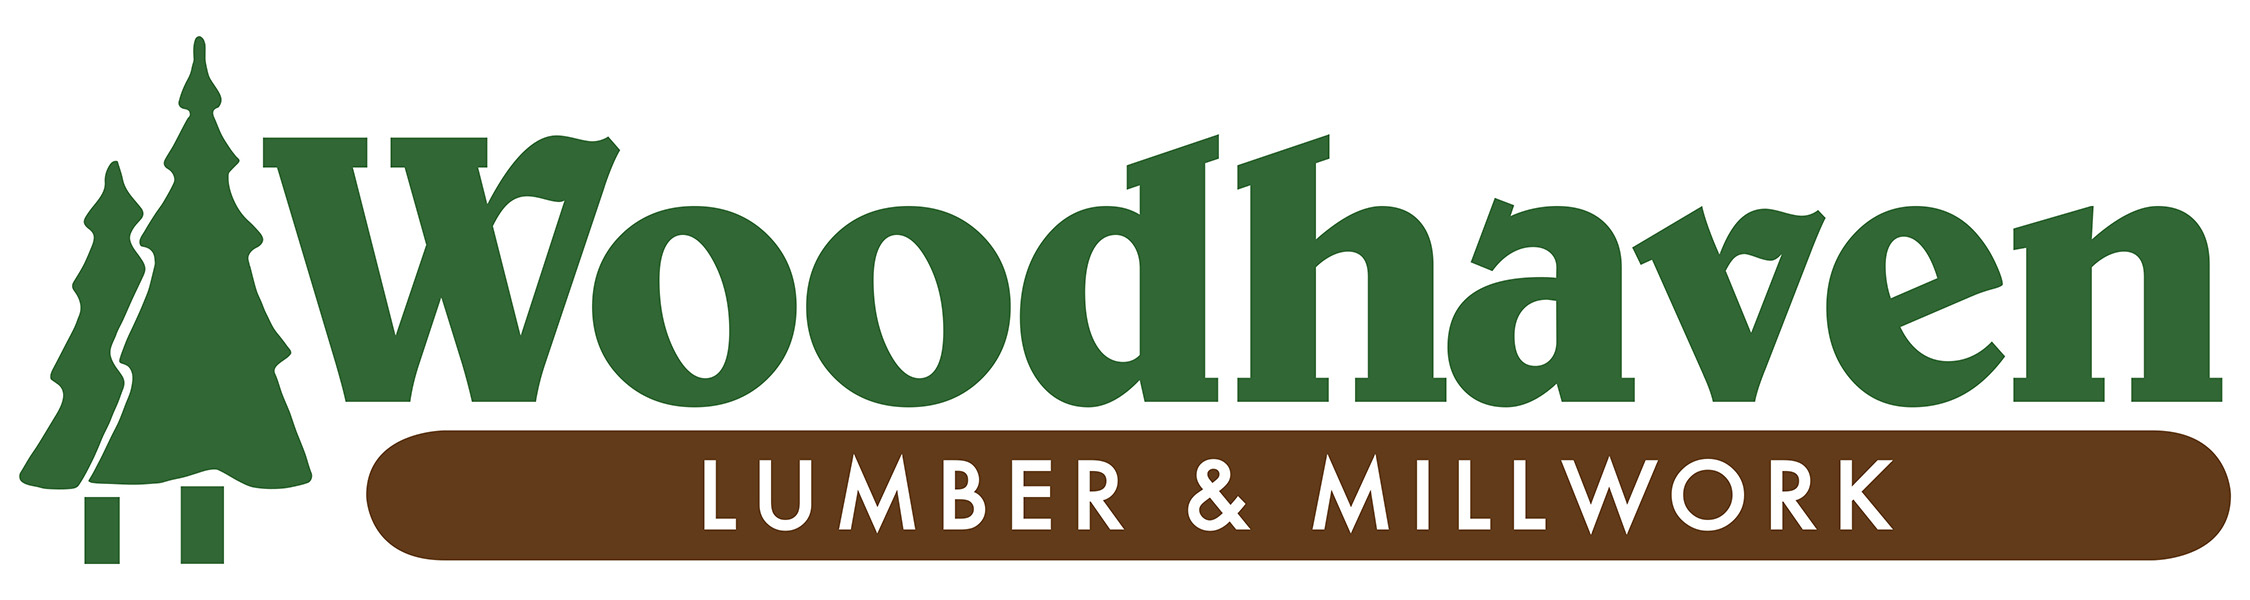 Woodhaven Lumber & Millwork - Point Pleasant Beach logo